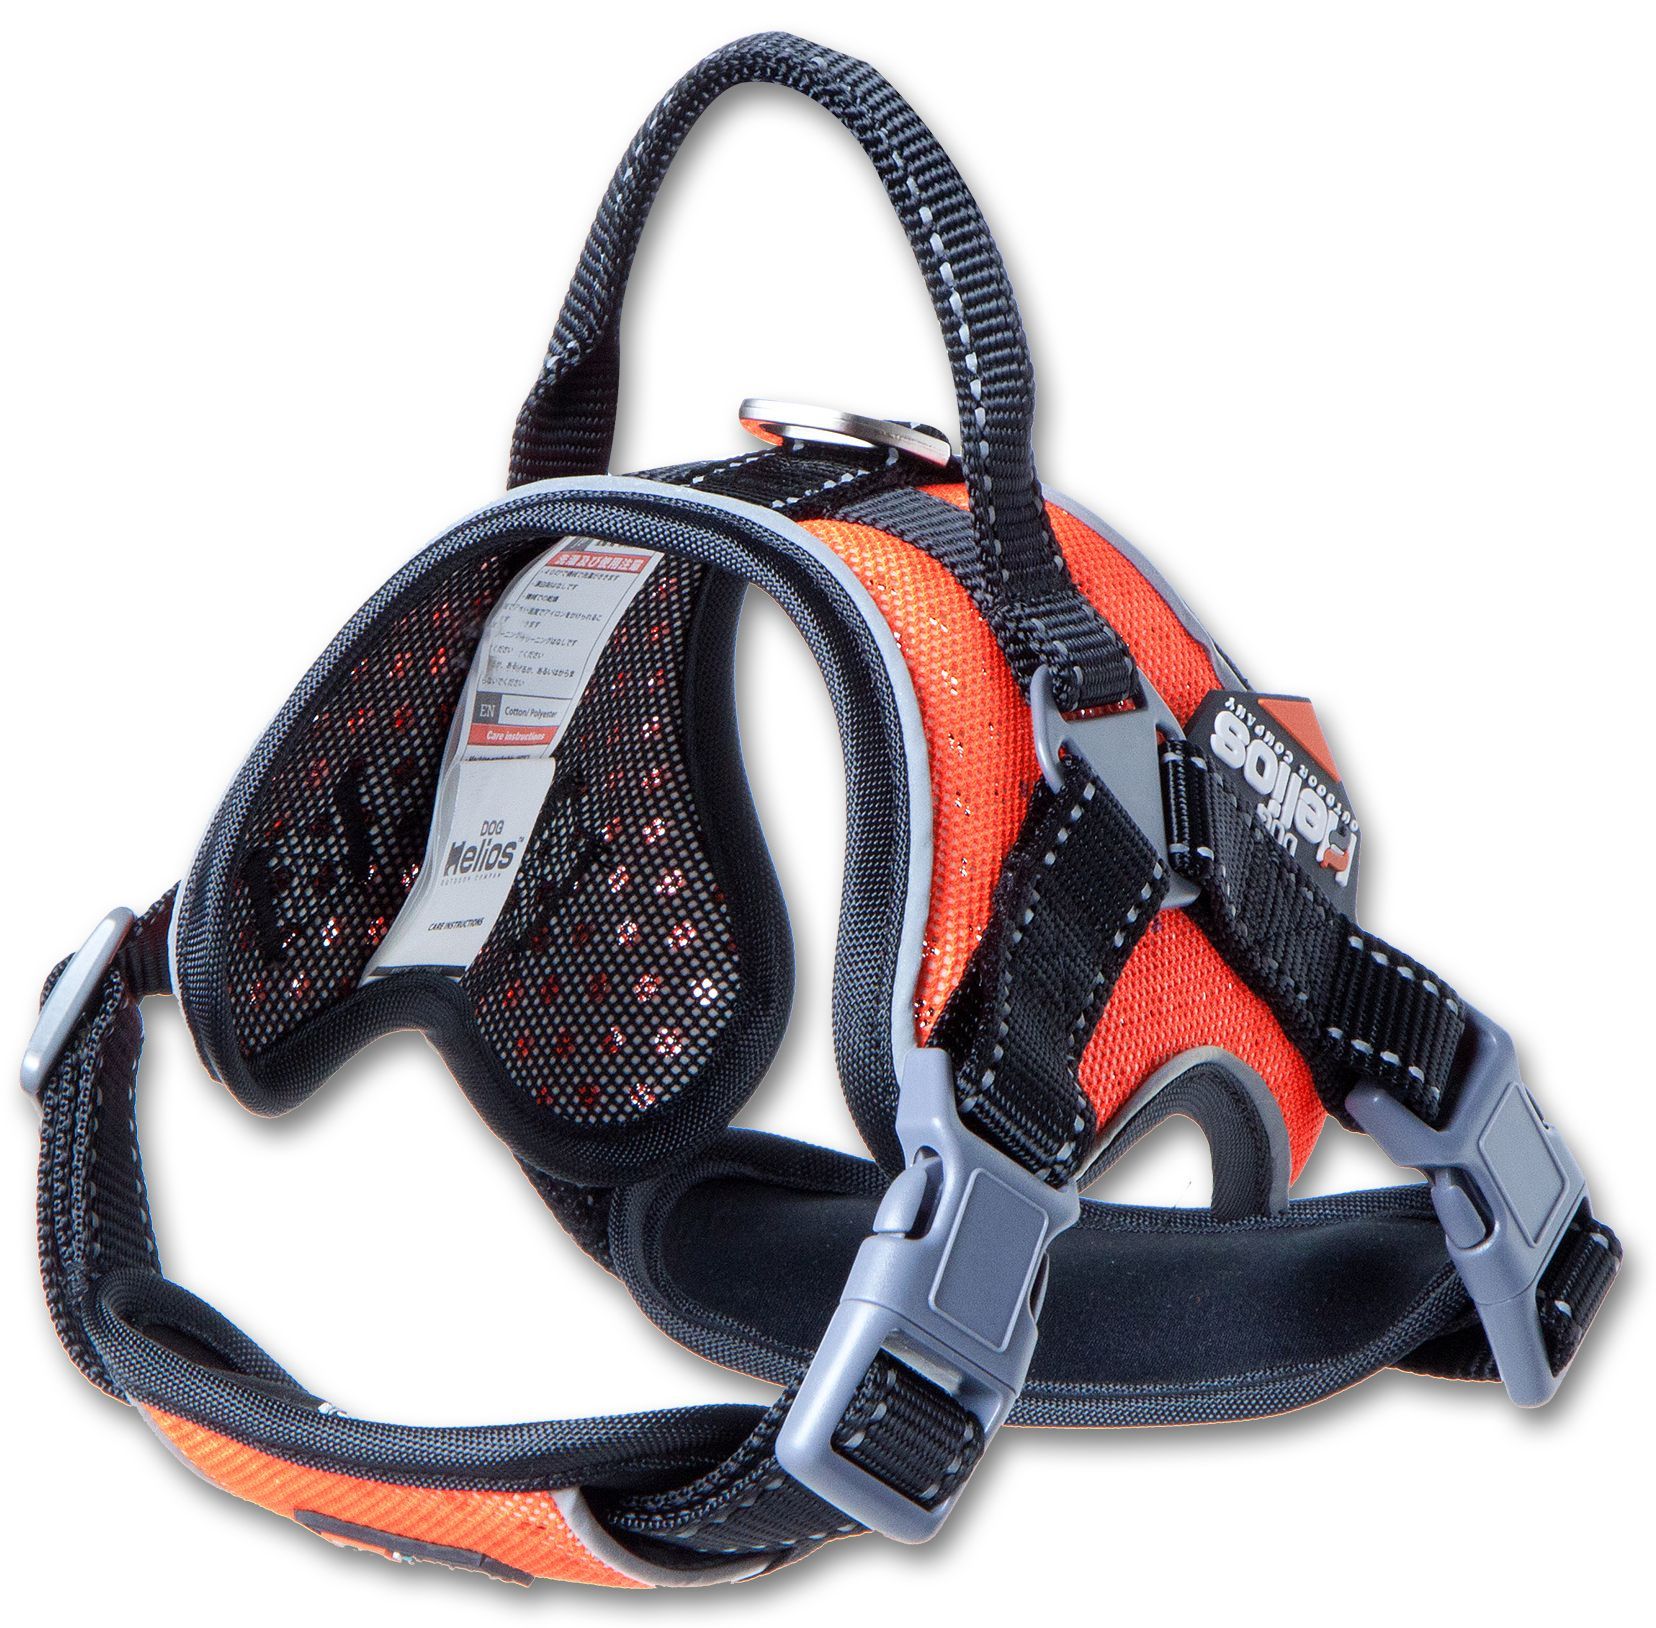 Dog Helios ® 'Scorpion' Sporty High-Performance Free-Range Dog Harness Orange Small